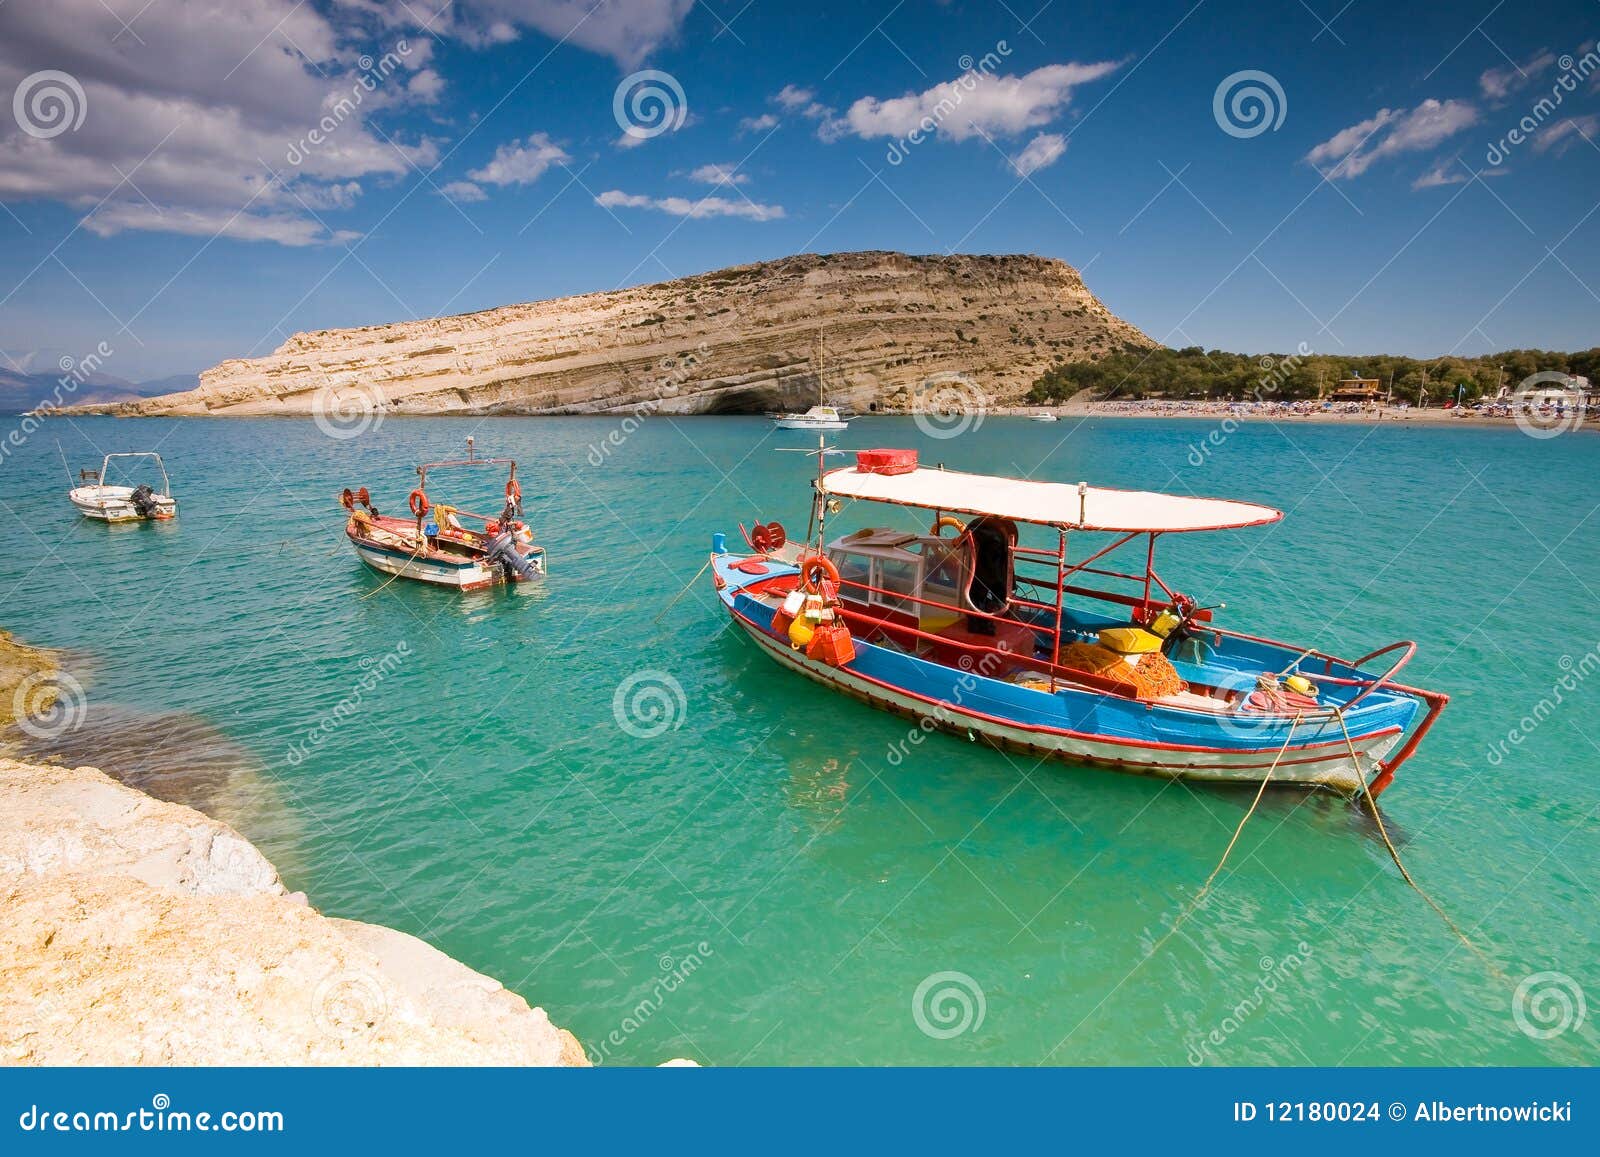 fishing boats anchored in matala bay, crete, greec